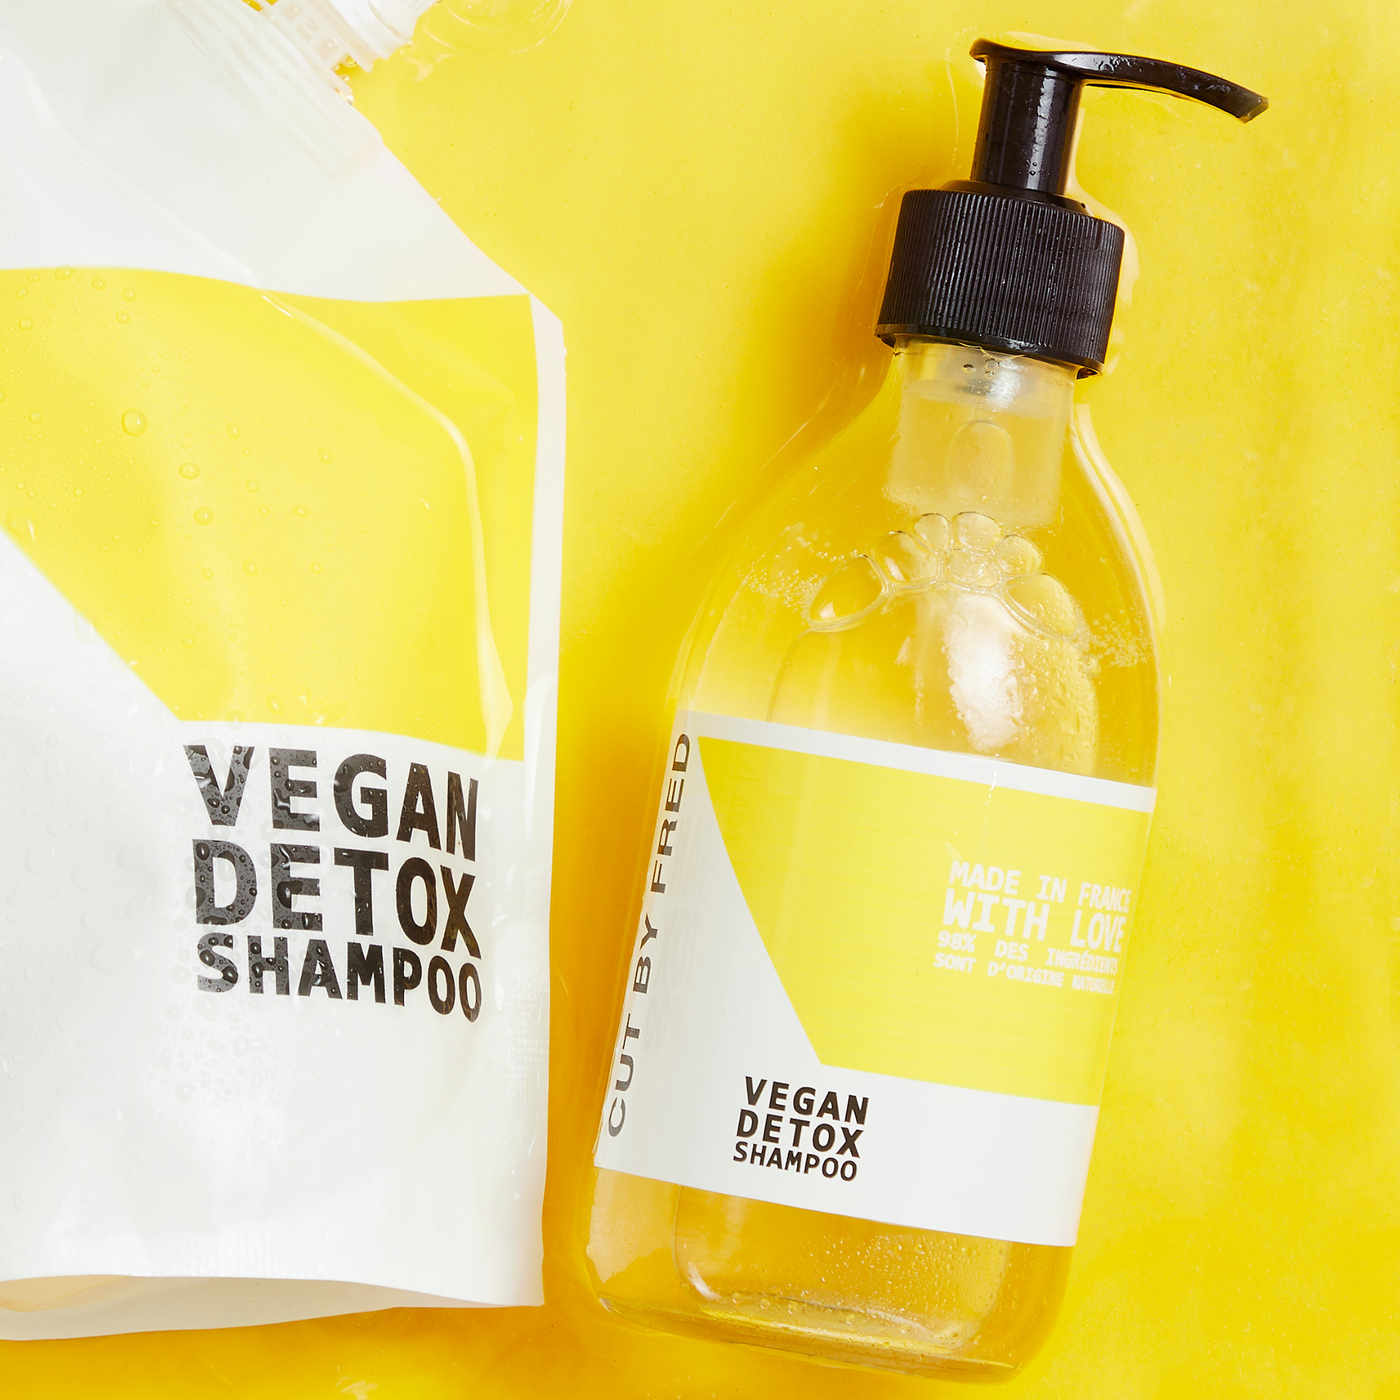 Vegan Detox Shampoo - new 290 ml size